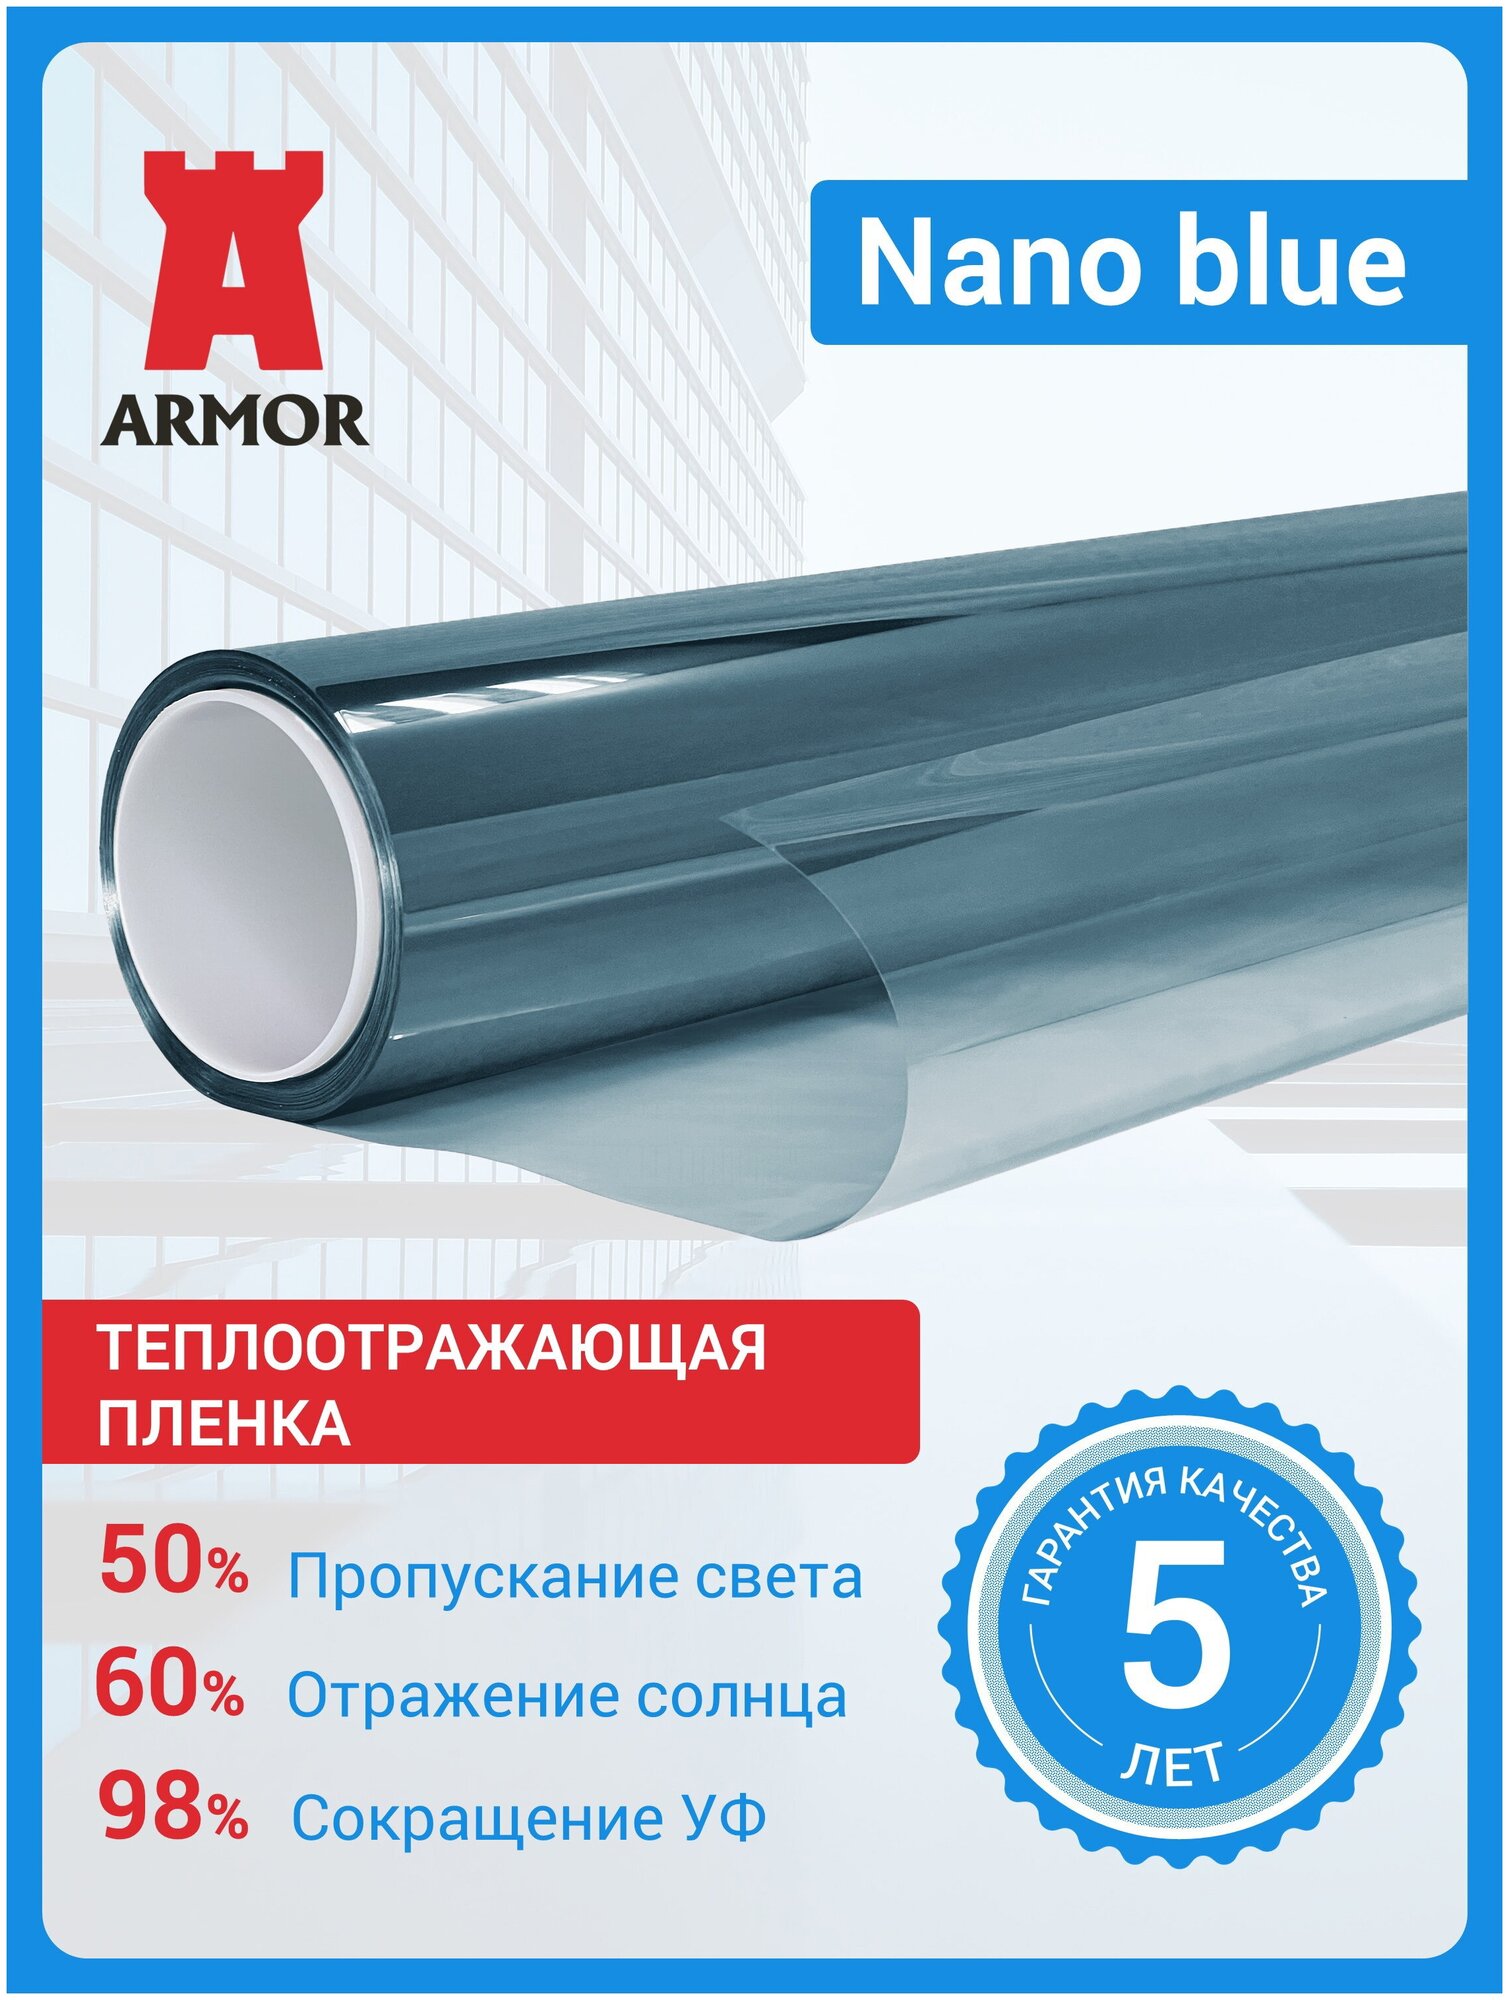 Самоклеящаяся теплоотражающая пленка для окон Nano Blue, цвет - голубой, размер 1,52 м. х 10м. (152х1000 см)